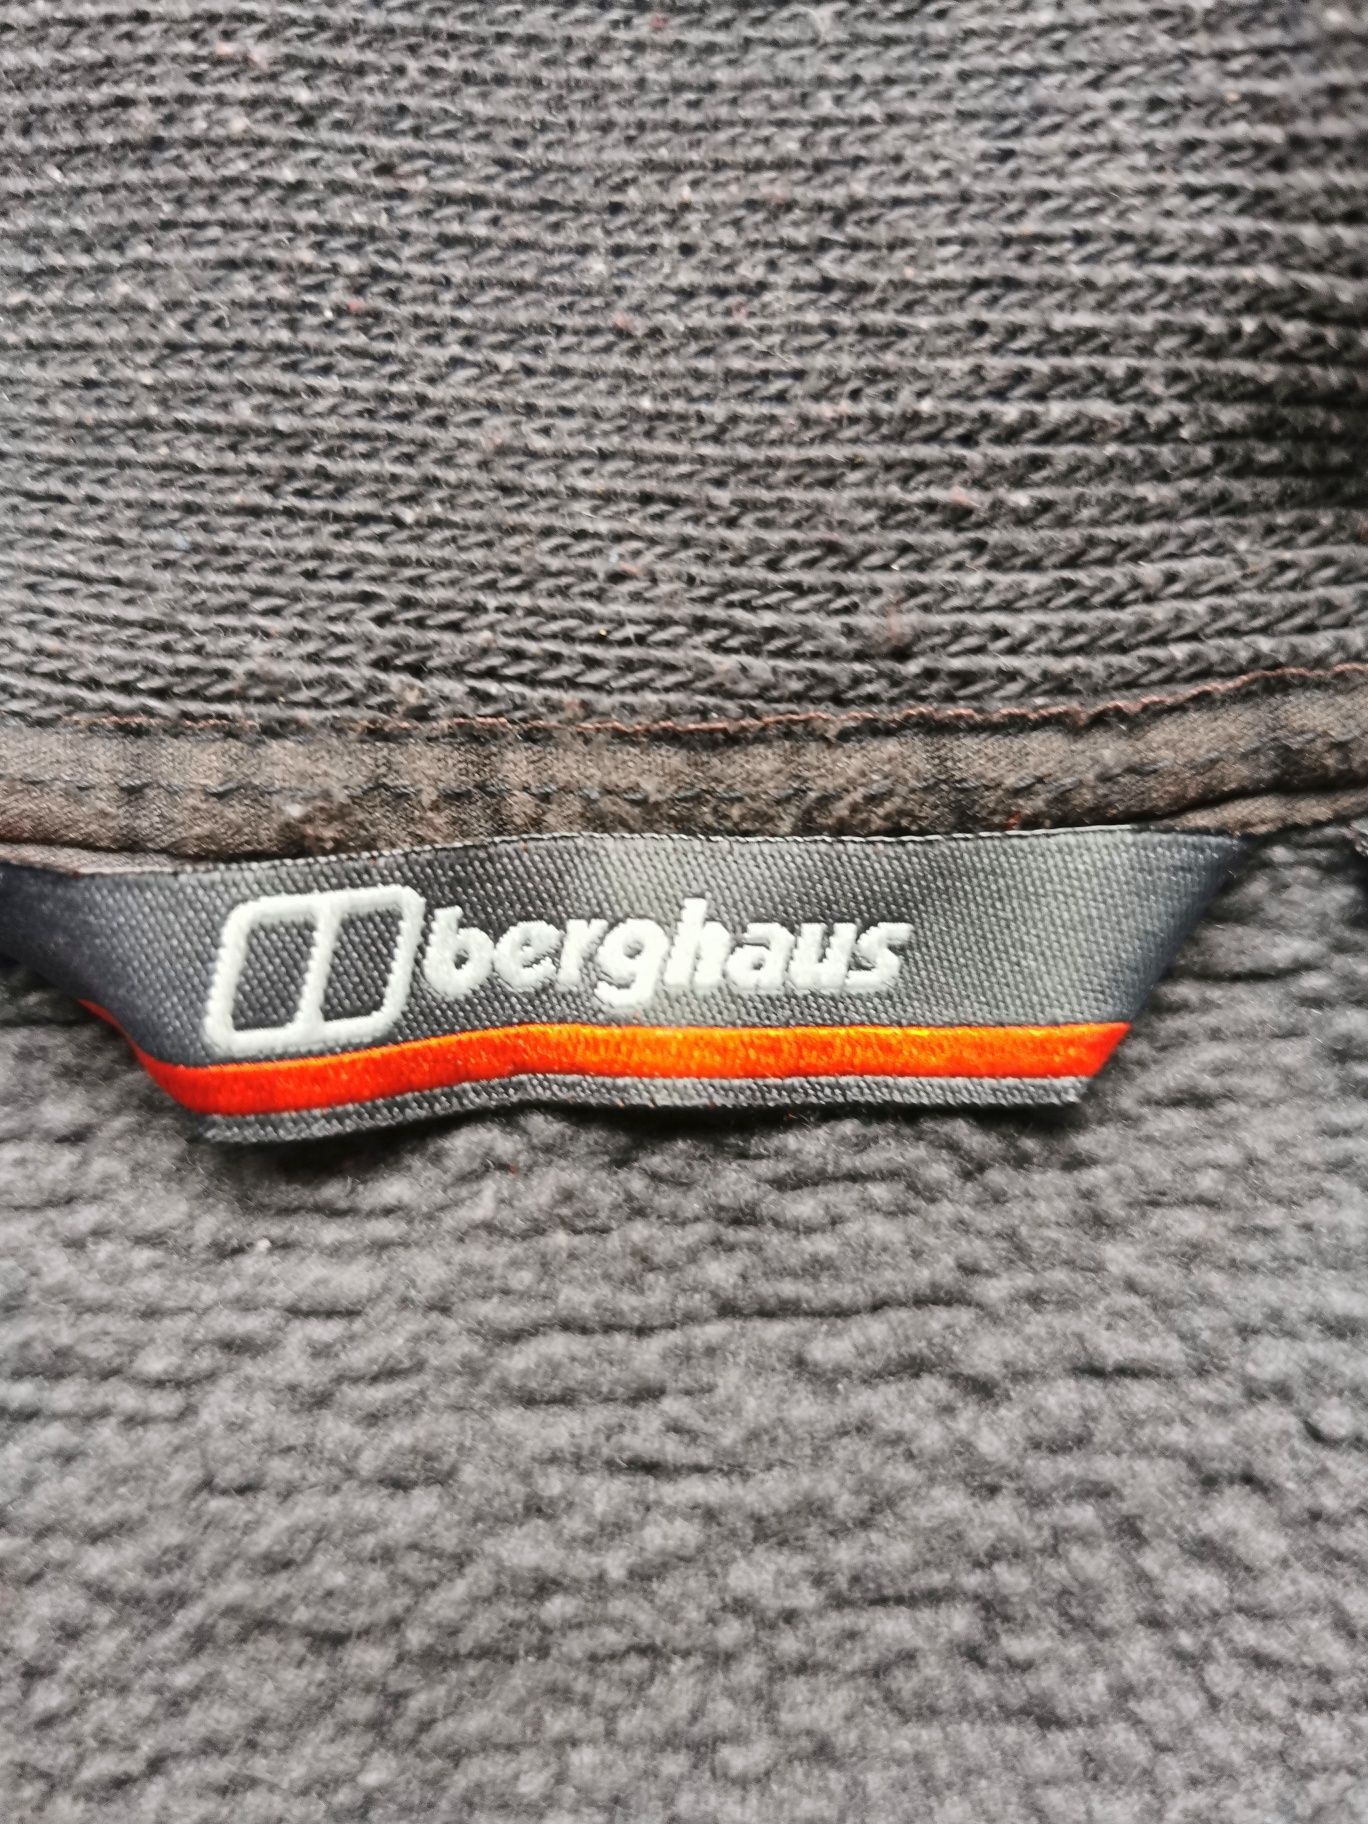 Berghaus szara bluza ocieplana, rozmiar S